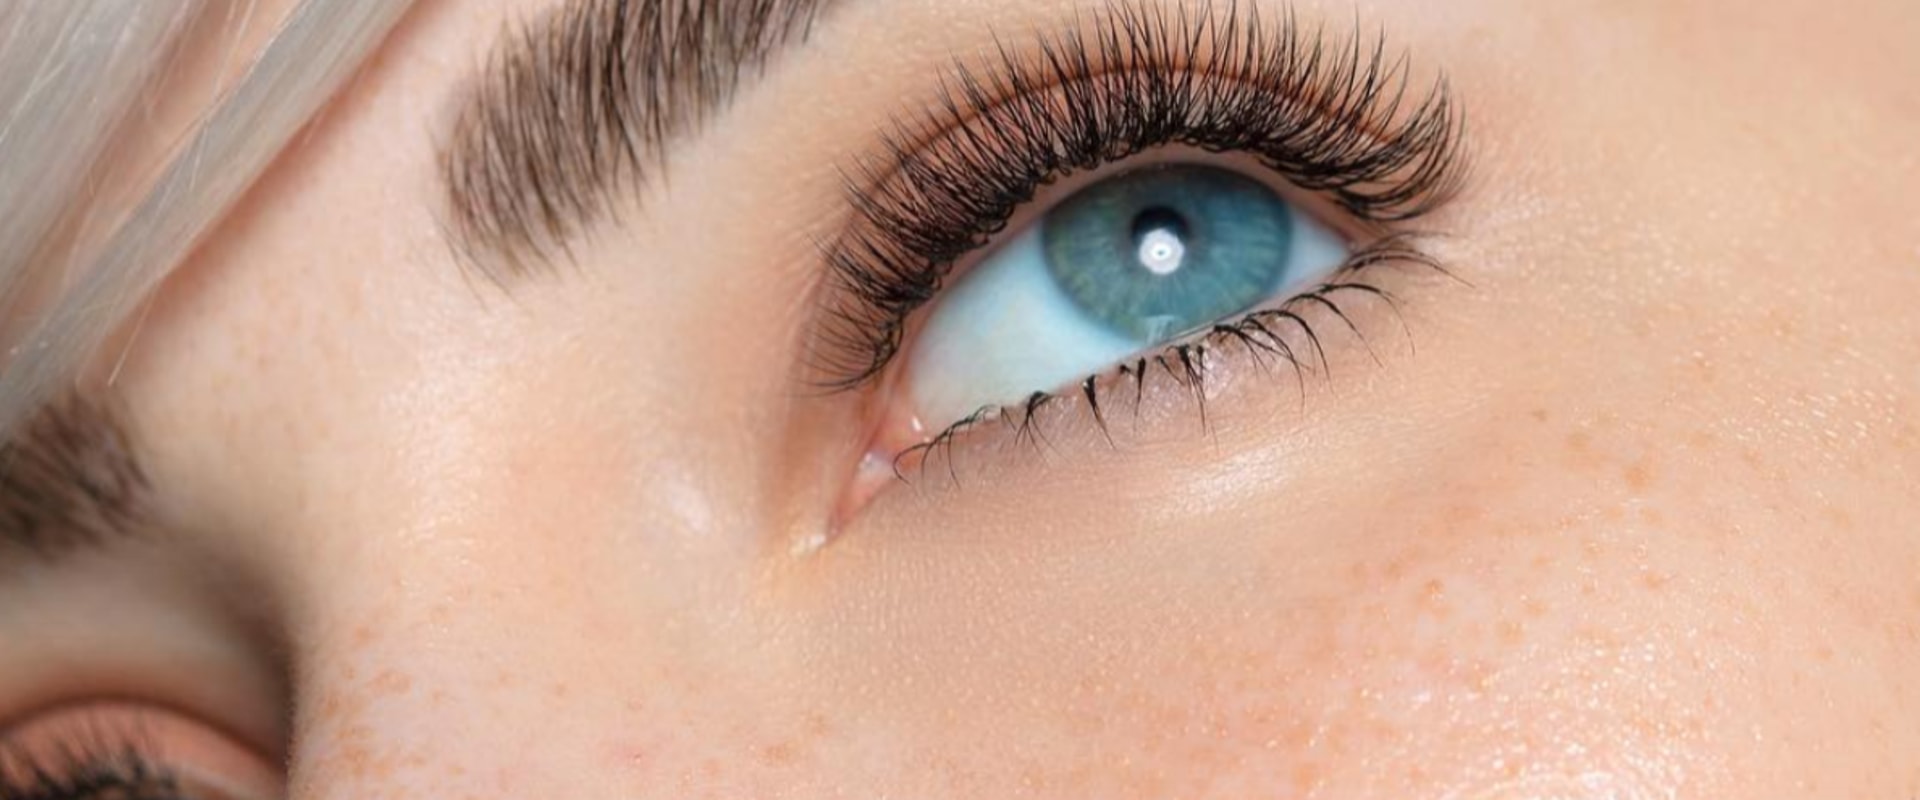 When do eyelashes stop growing?